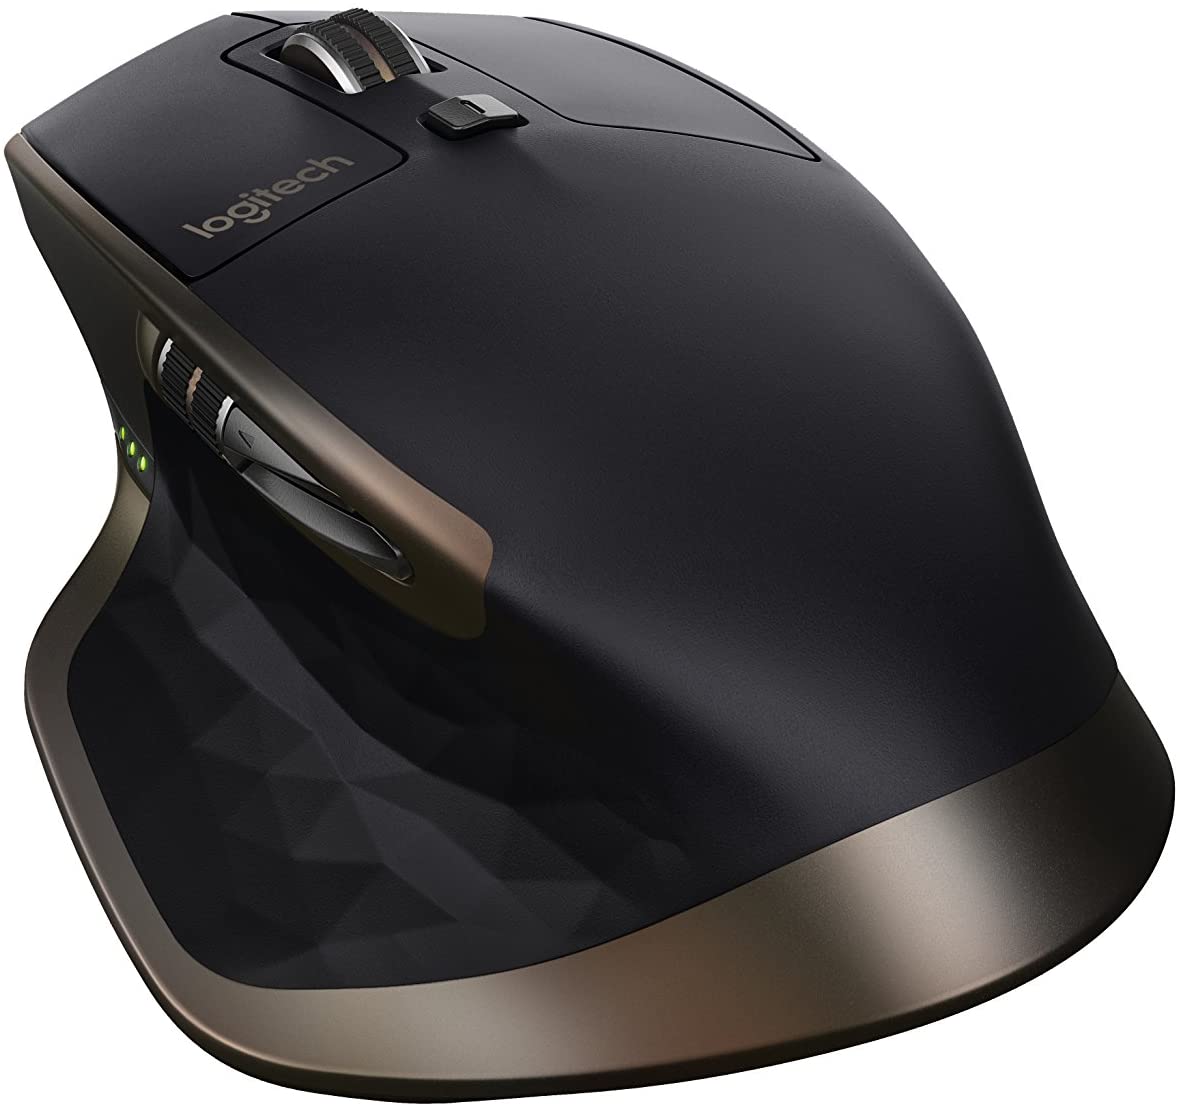 Mouse Logitech MX Master in offerta su Amazon